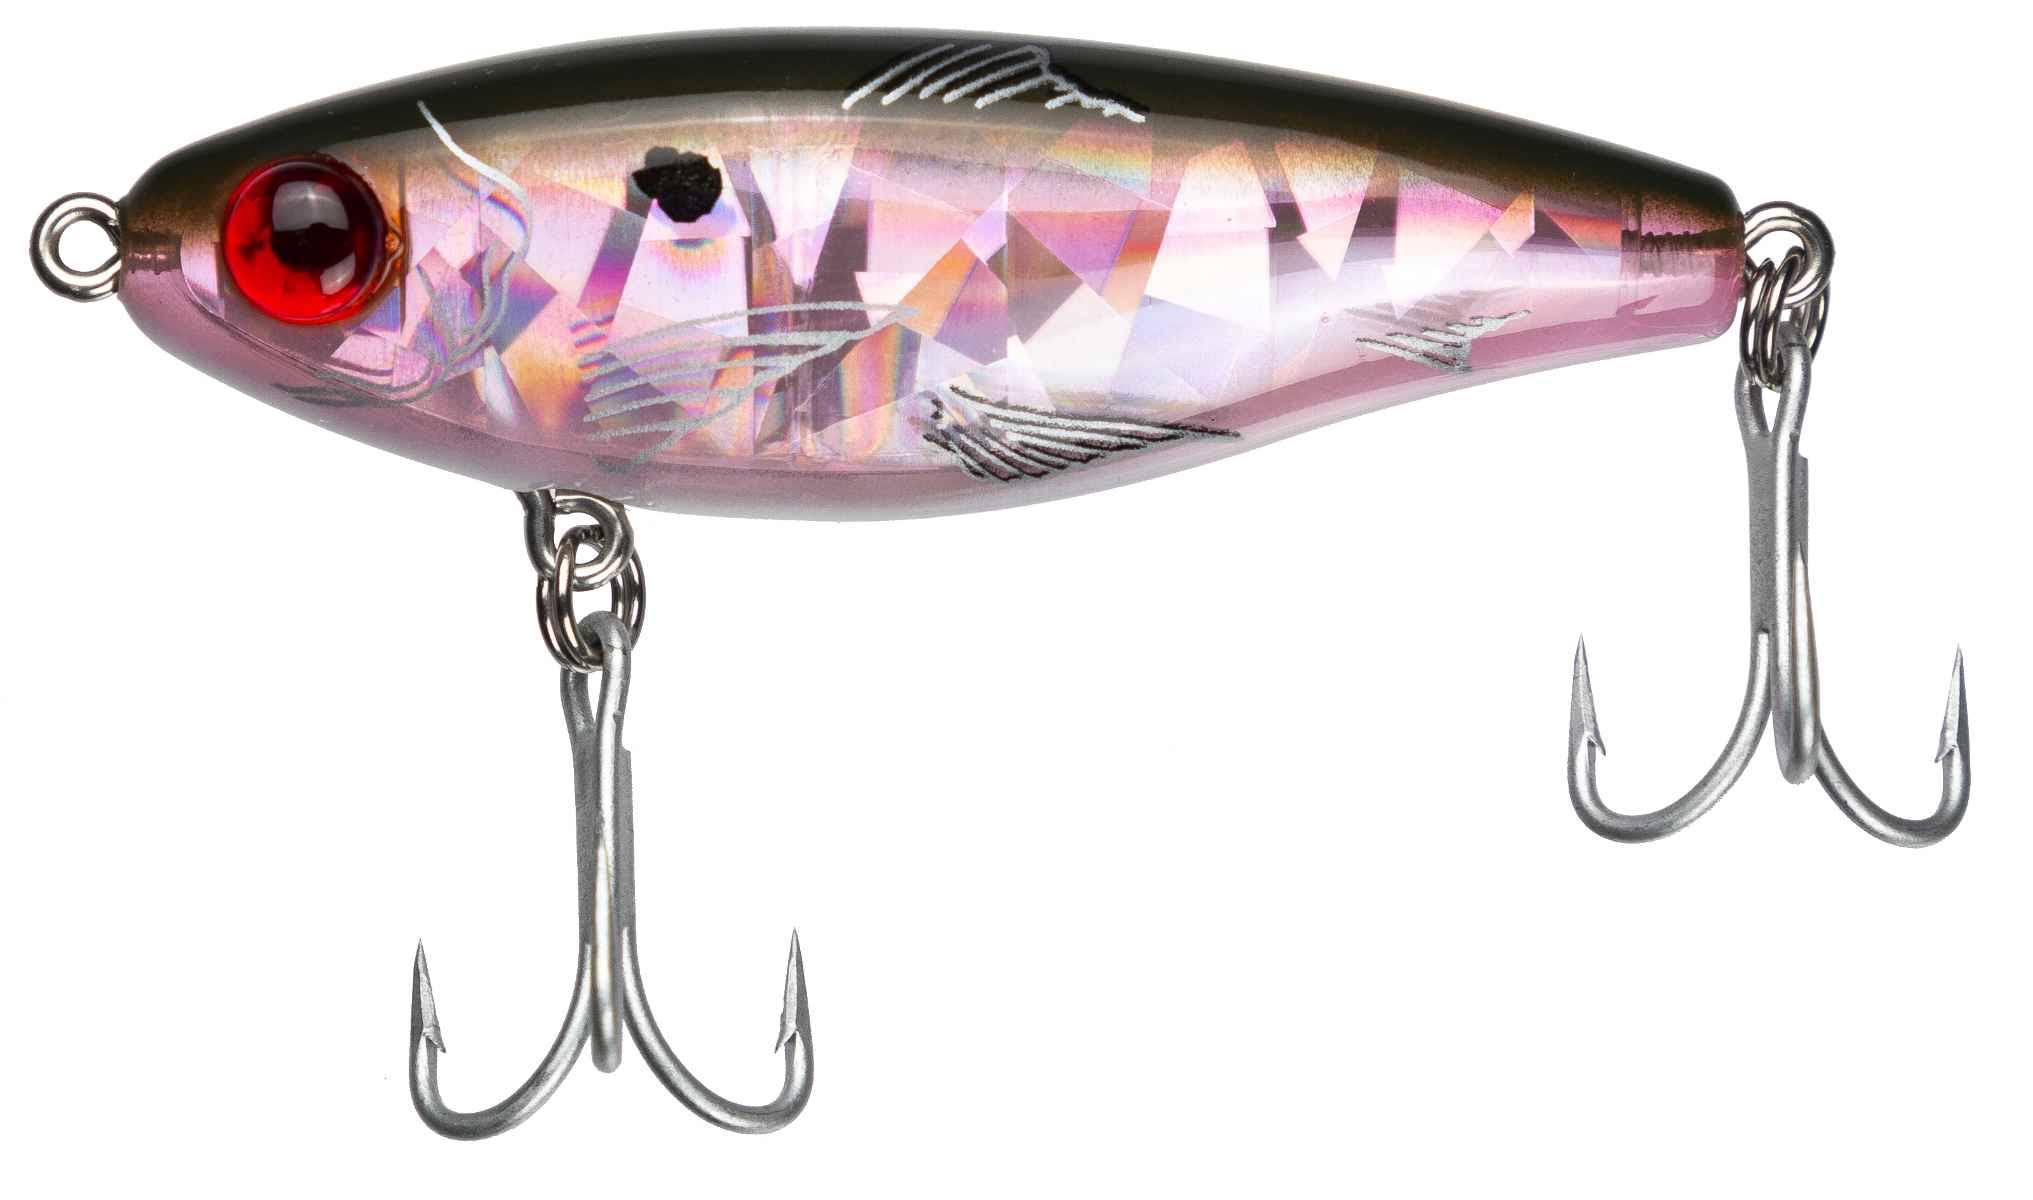 mirrOlure Mirrodine XL Twitchbait Fishing Lure - Rainbow Trout Silver